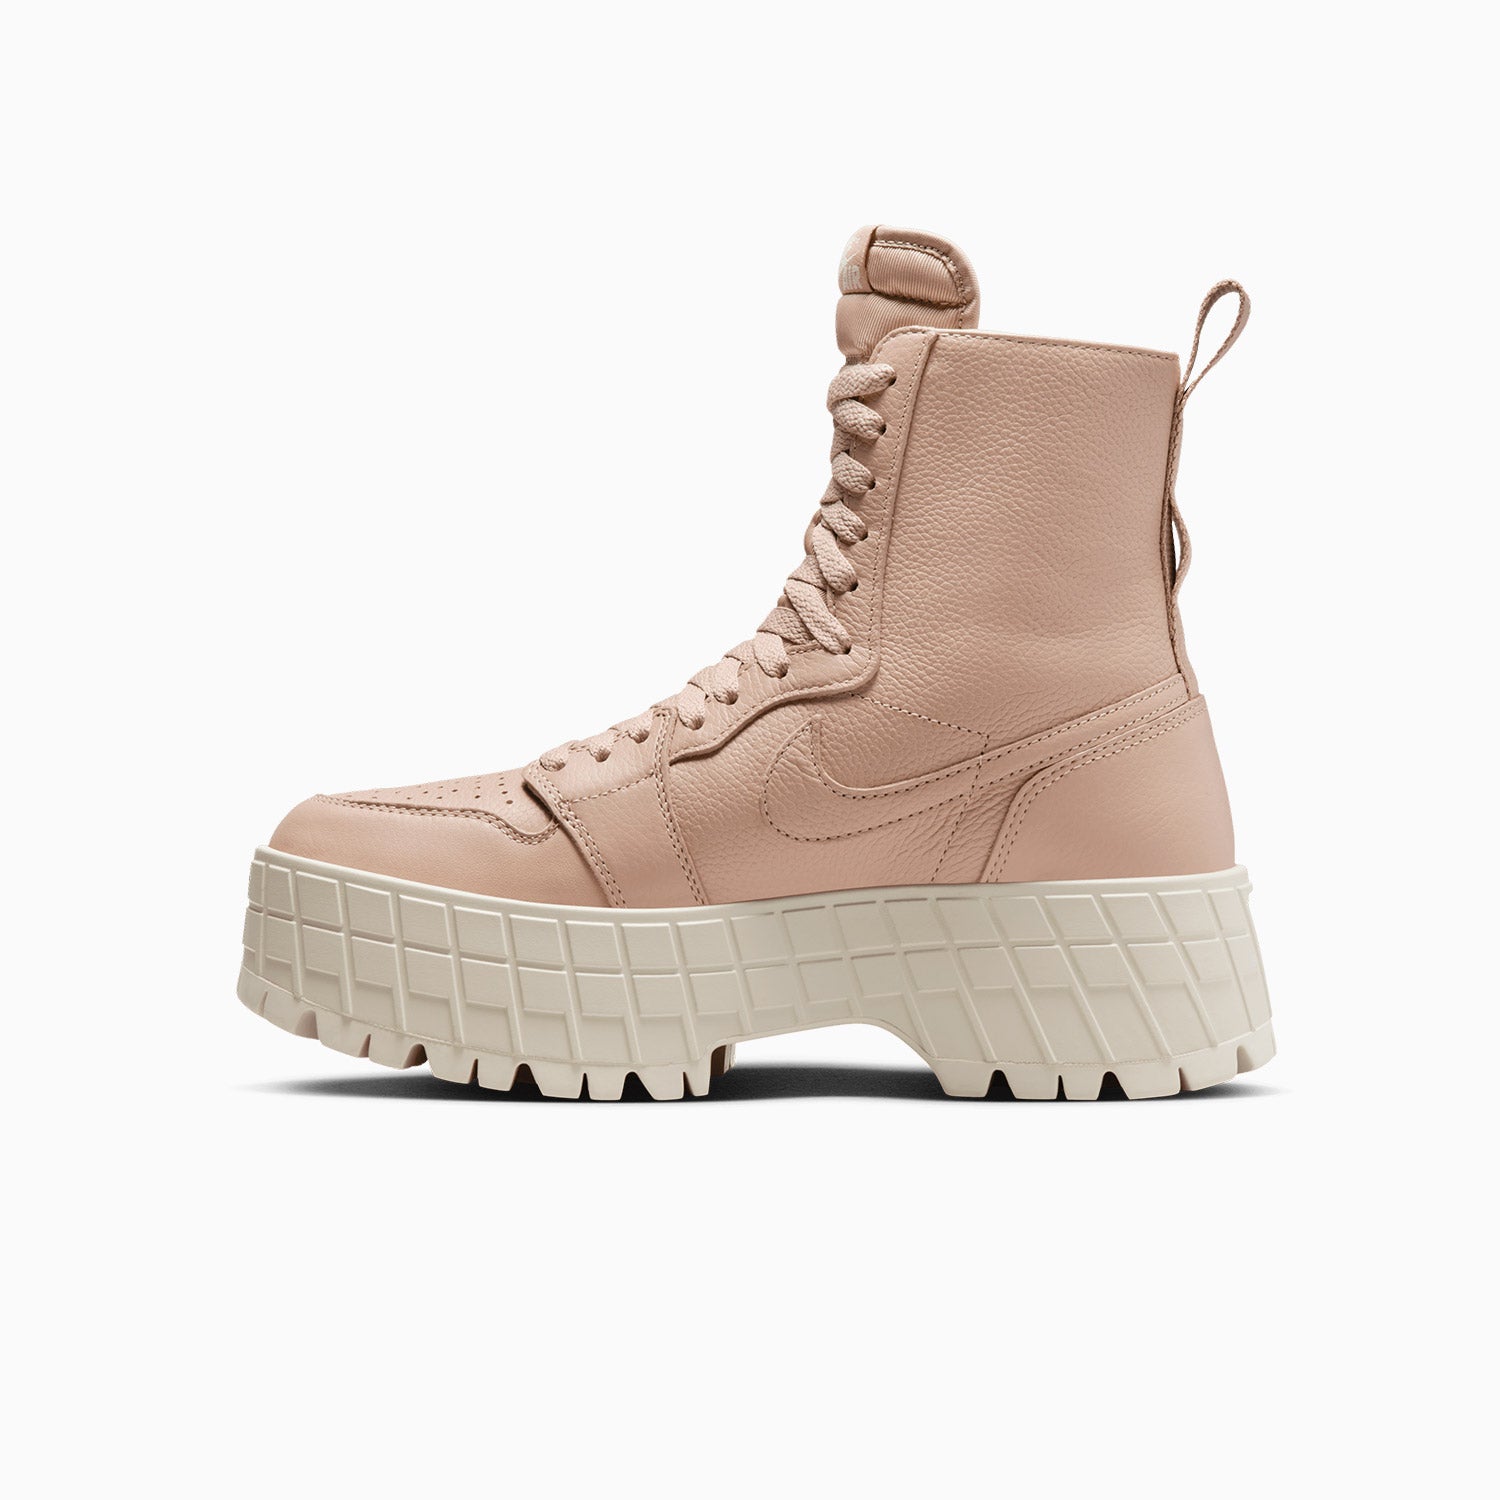 womens-air-jordan-1-brooklyn-legend-medium-brown-shoes-fj5737-200